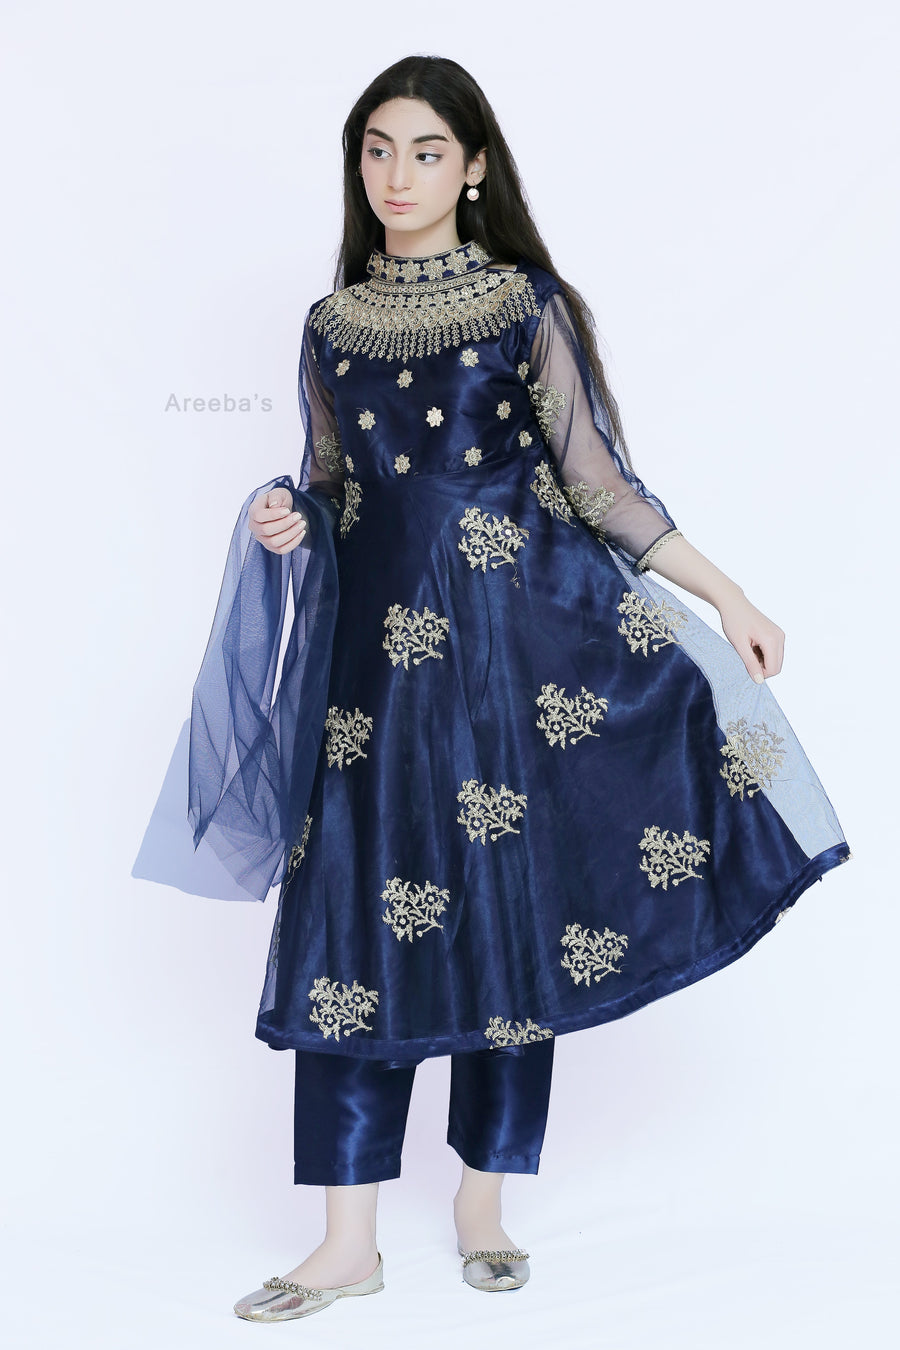 Girls BC30- Areeba's Couture